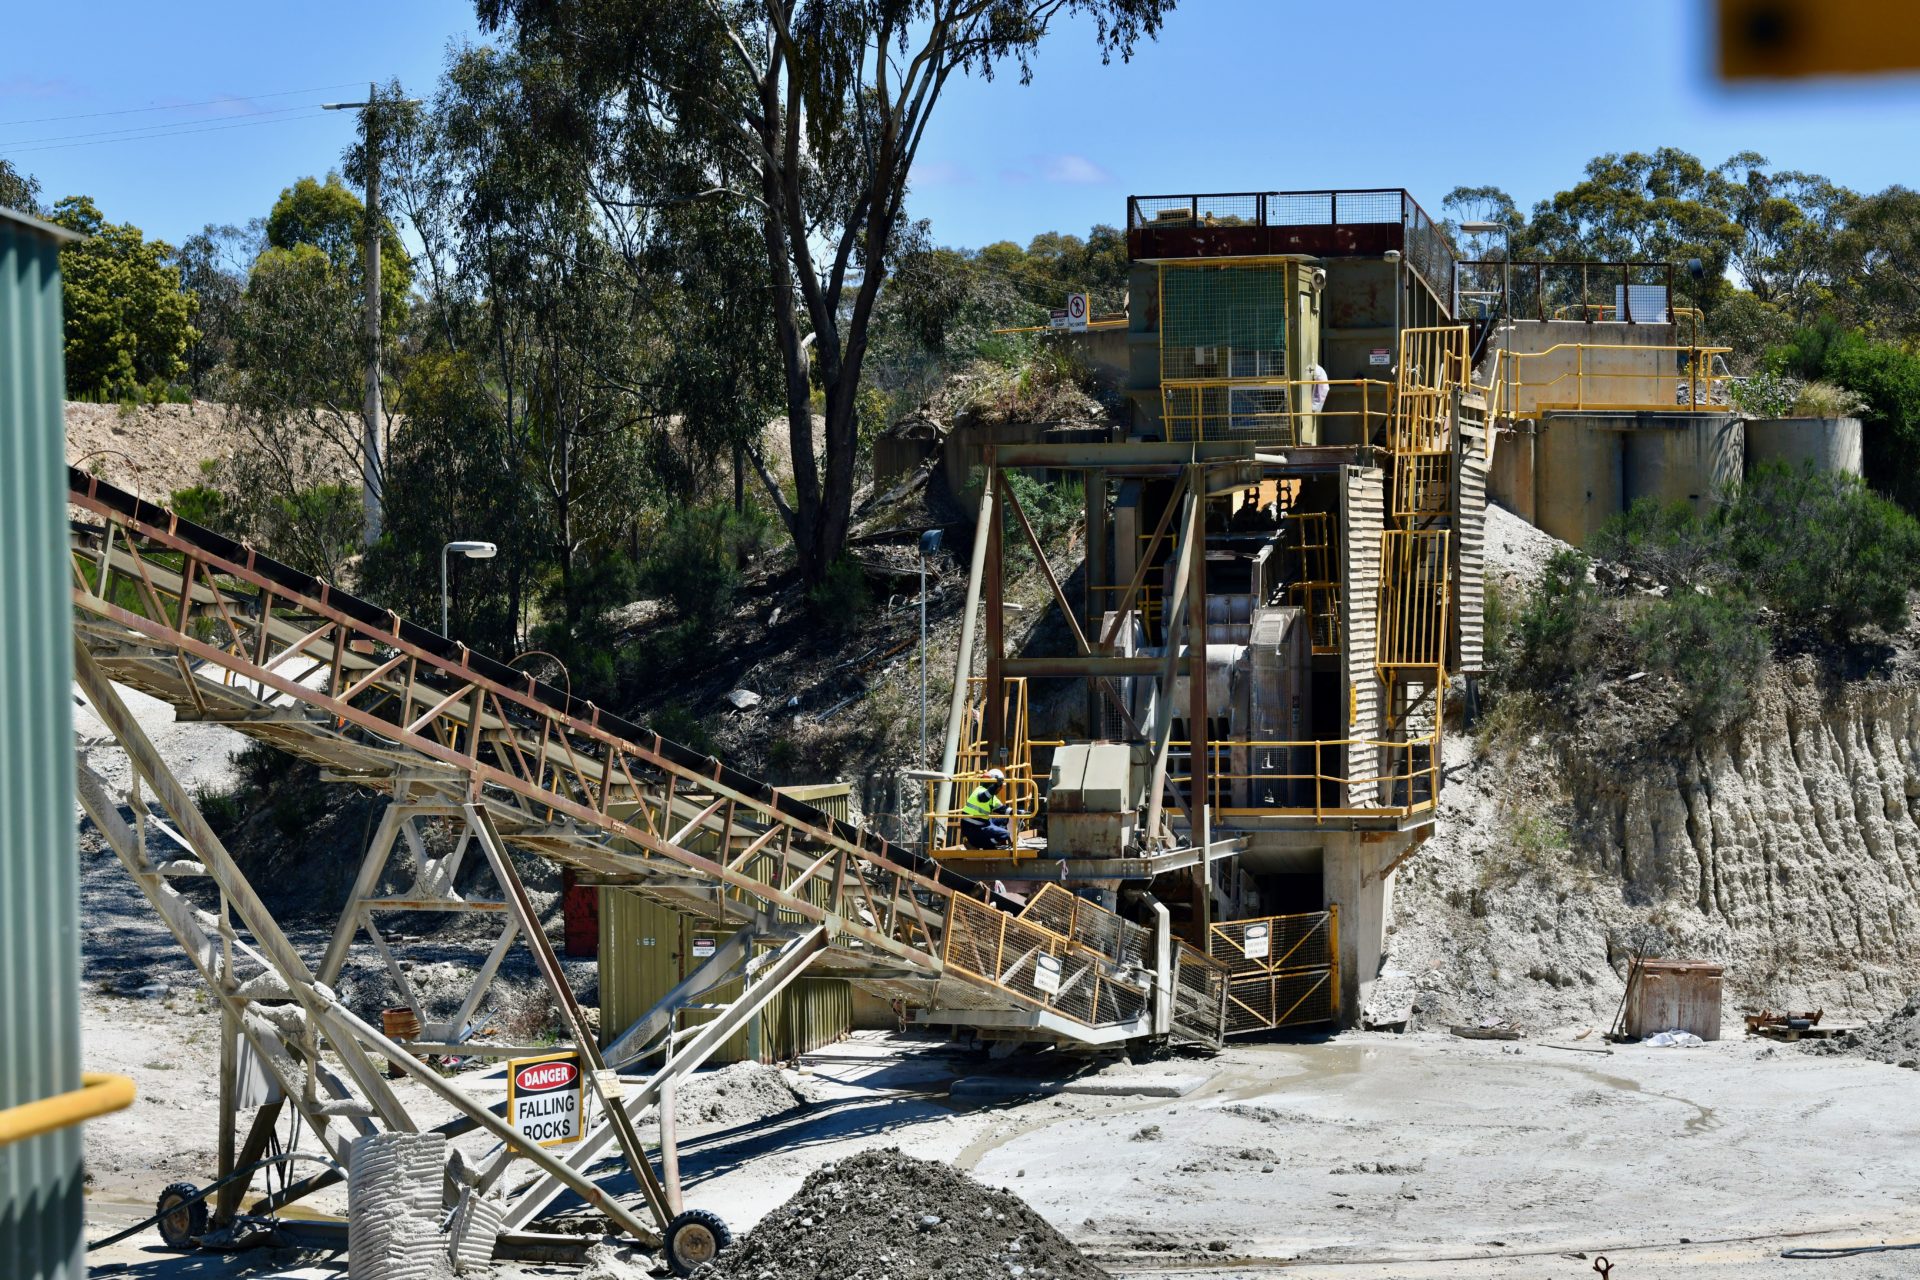 Modern mining